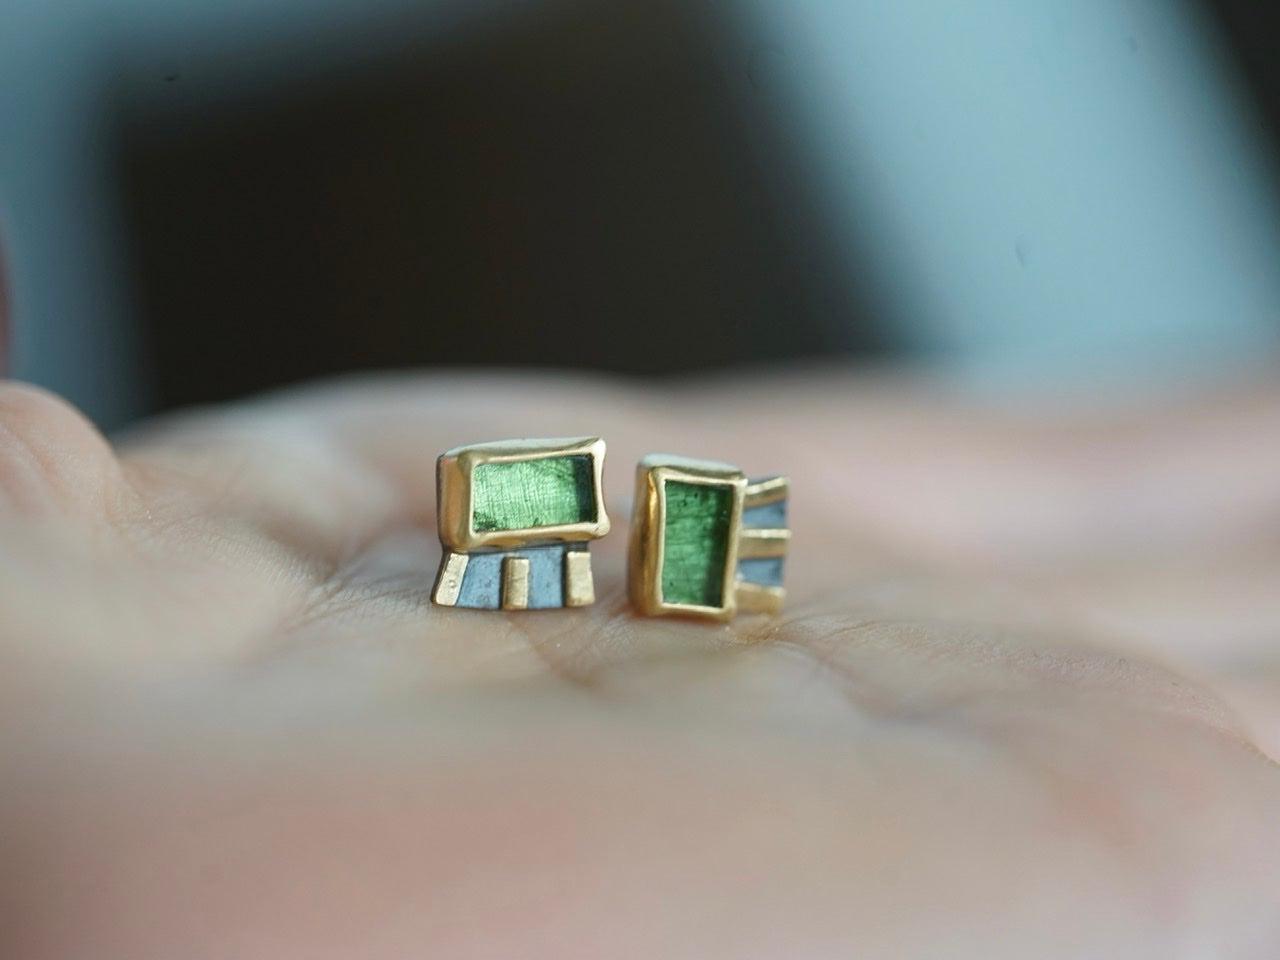 Green tourmaline and 22k gold earrings